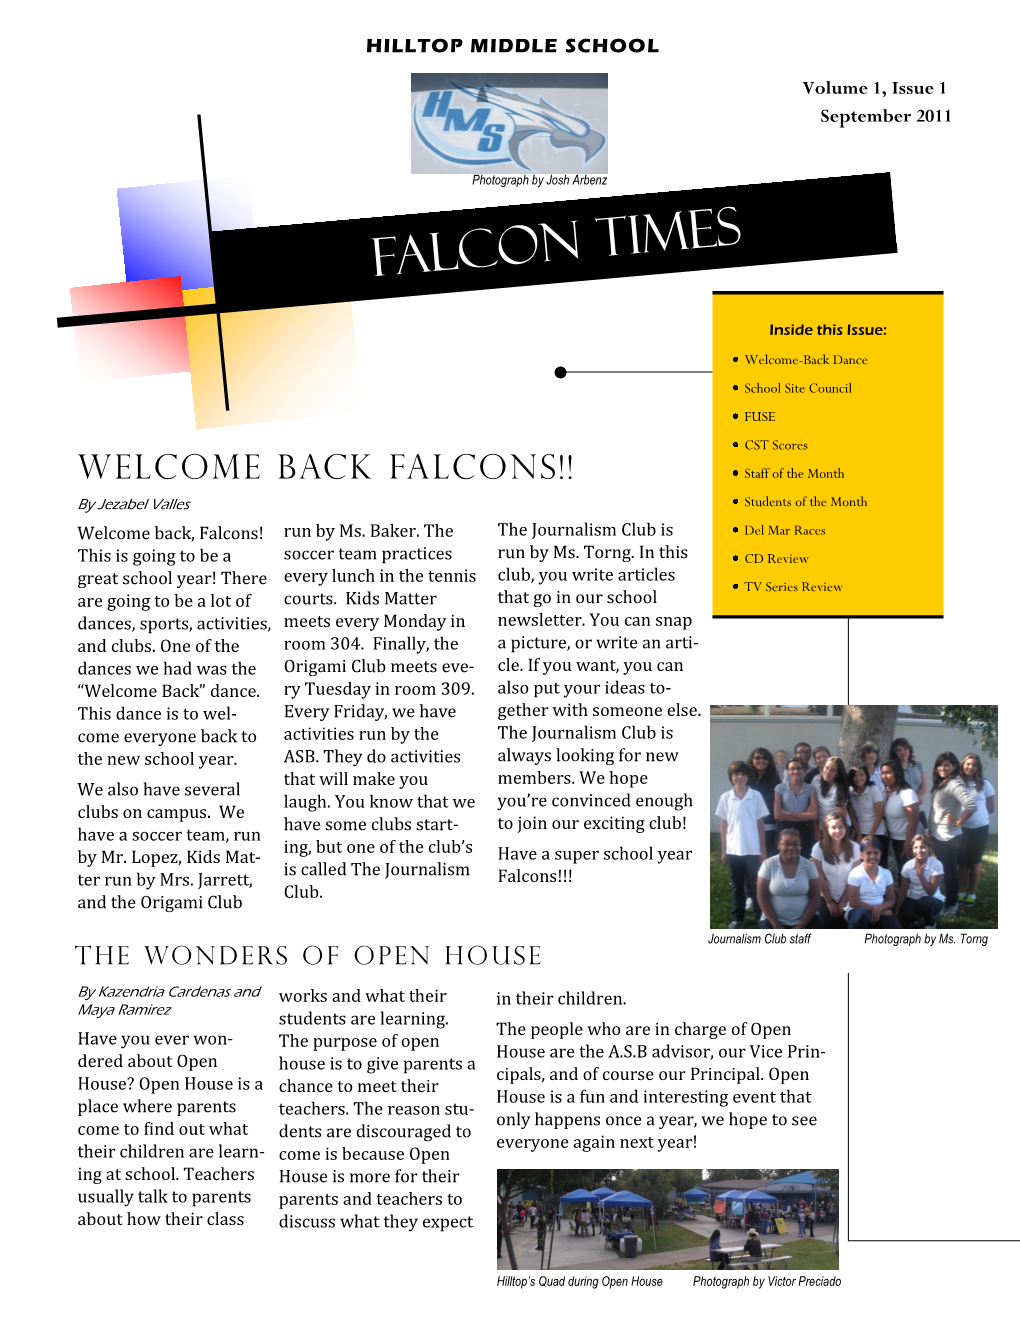 Falcon Times